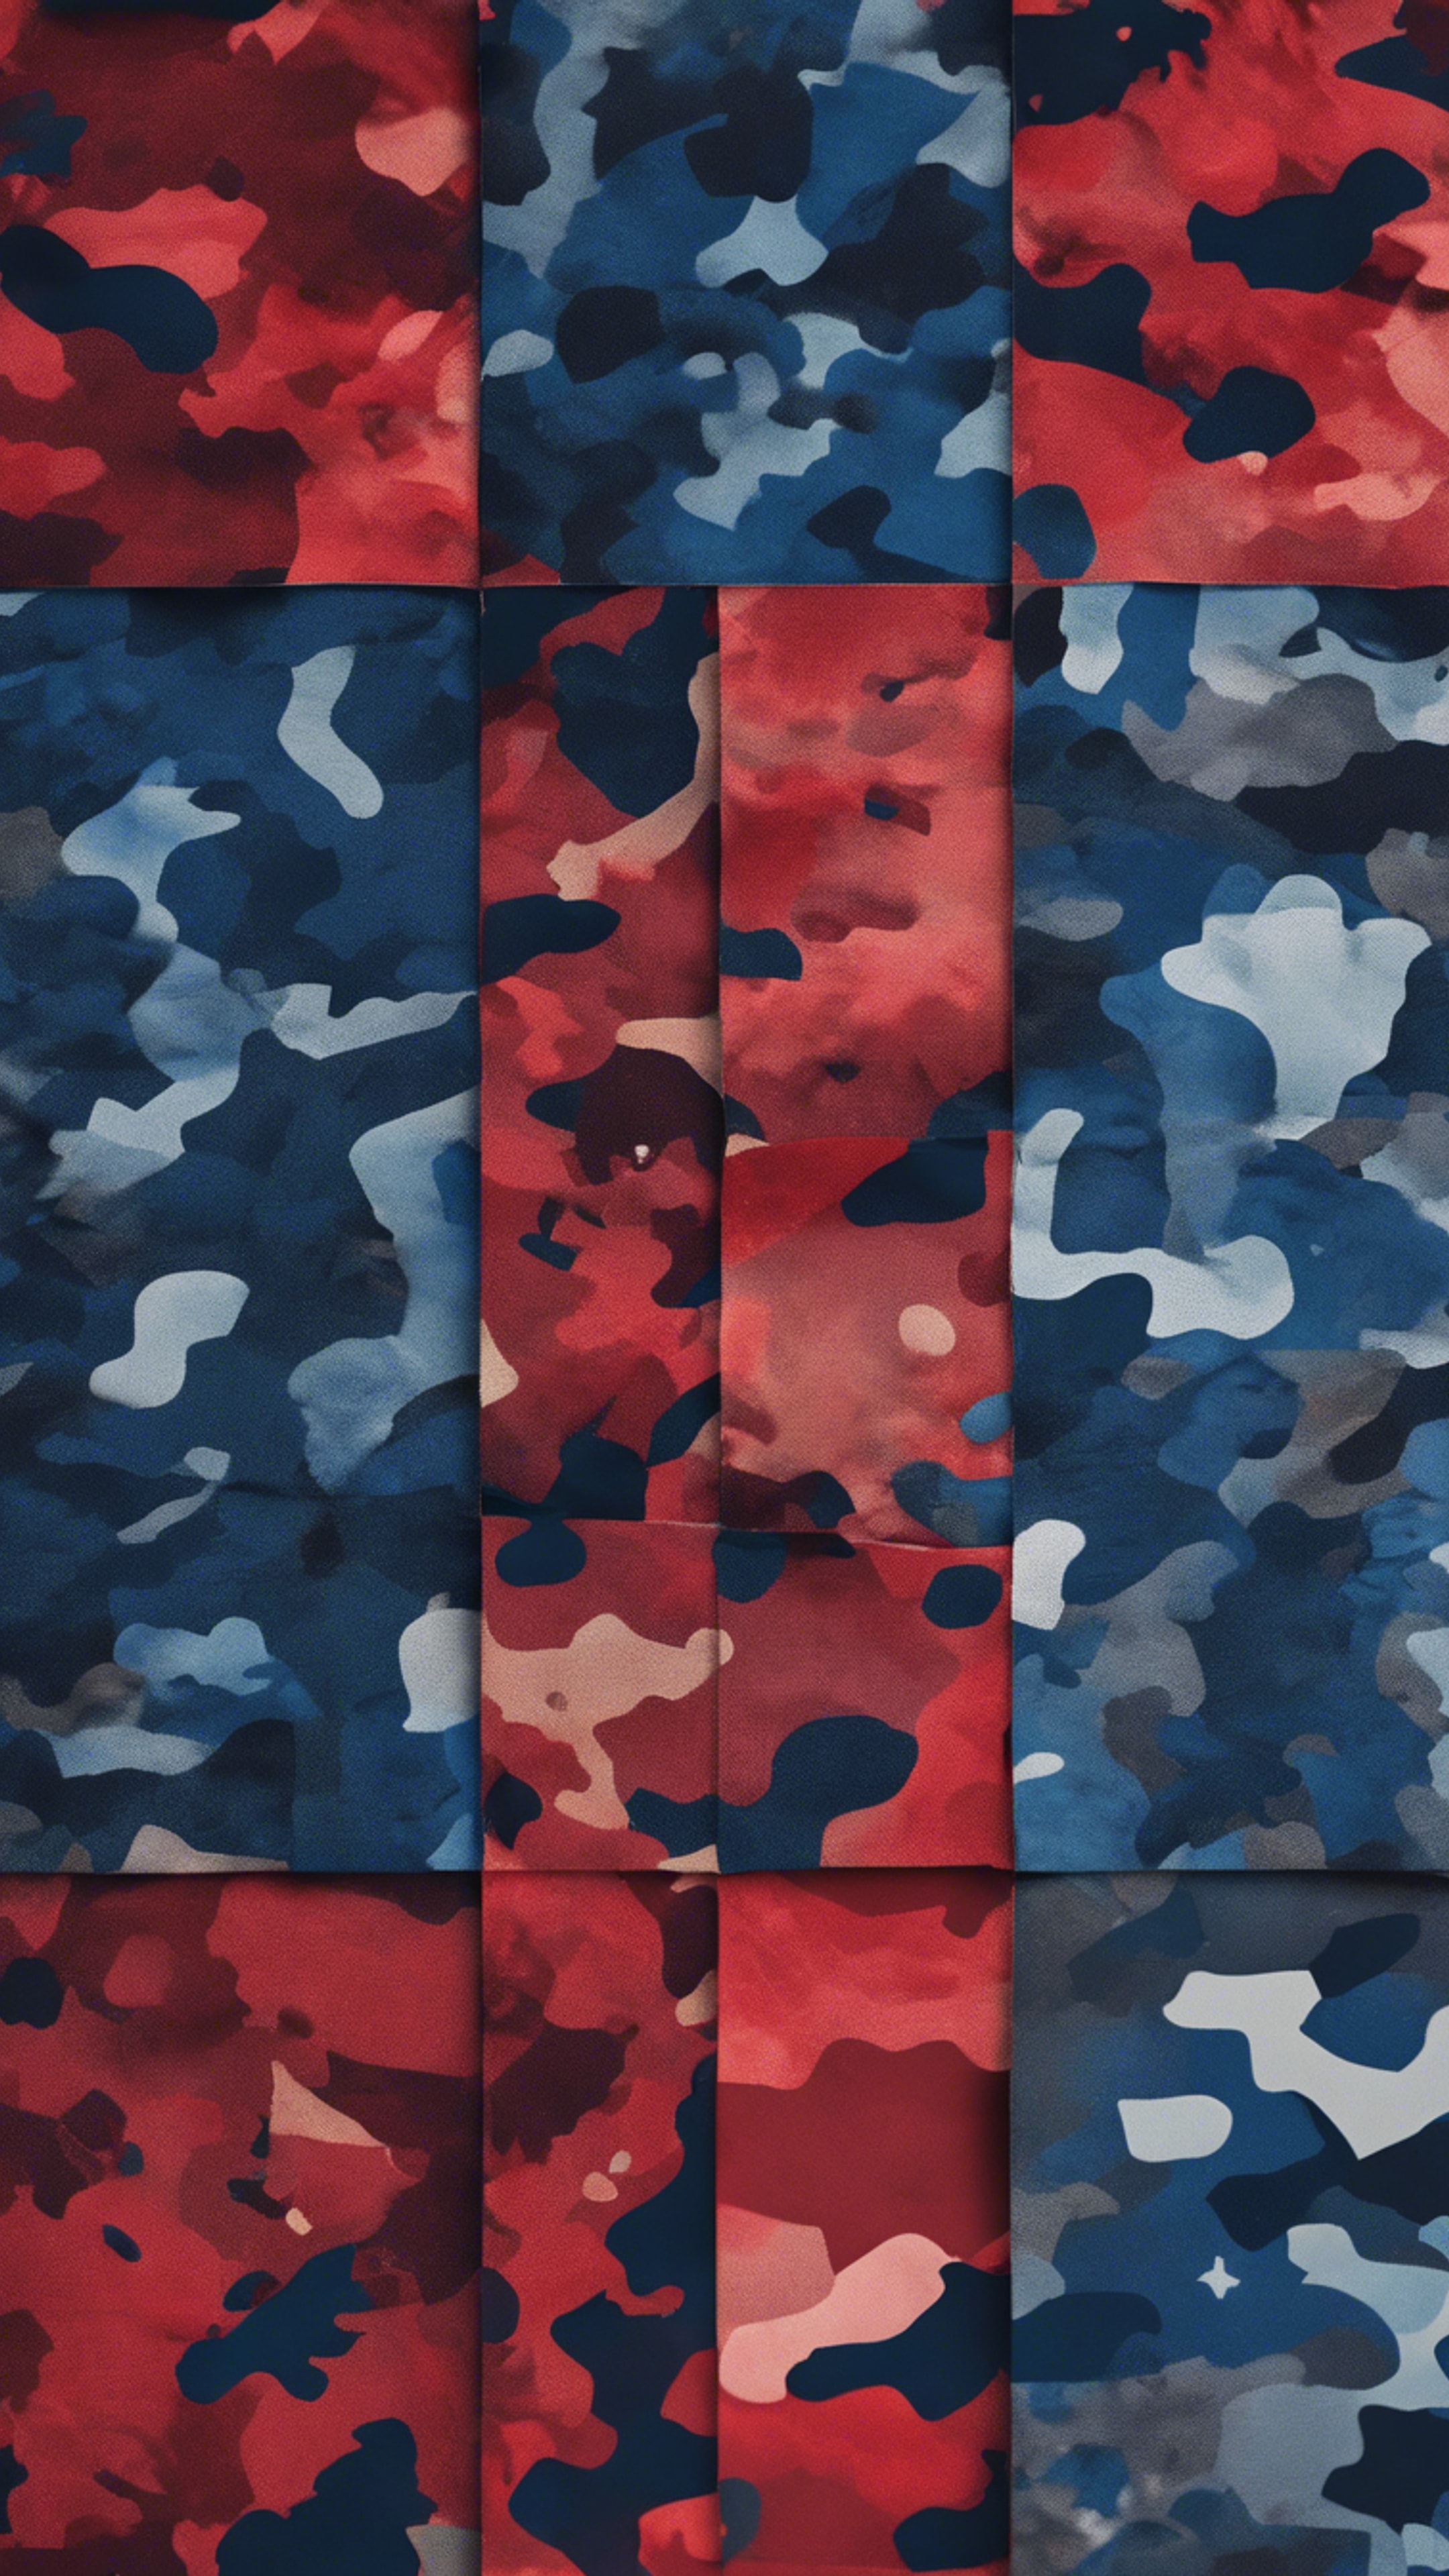 Wide patches of red and blue in a modernized camouflage pattern. Divar kağızı[bf2d18a8e46c447ea6e3]